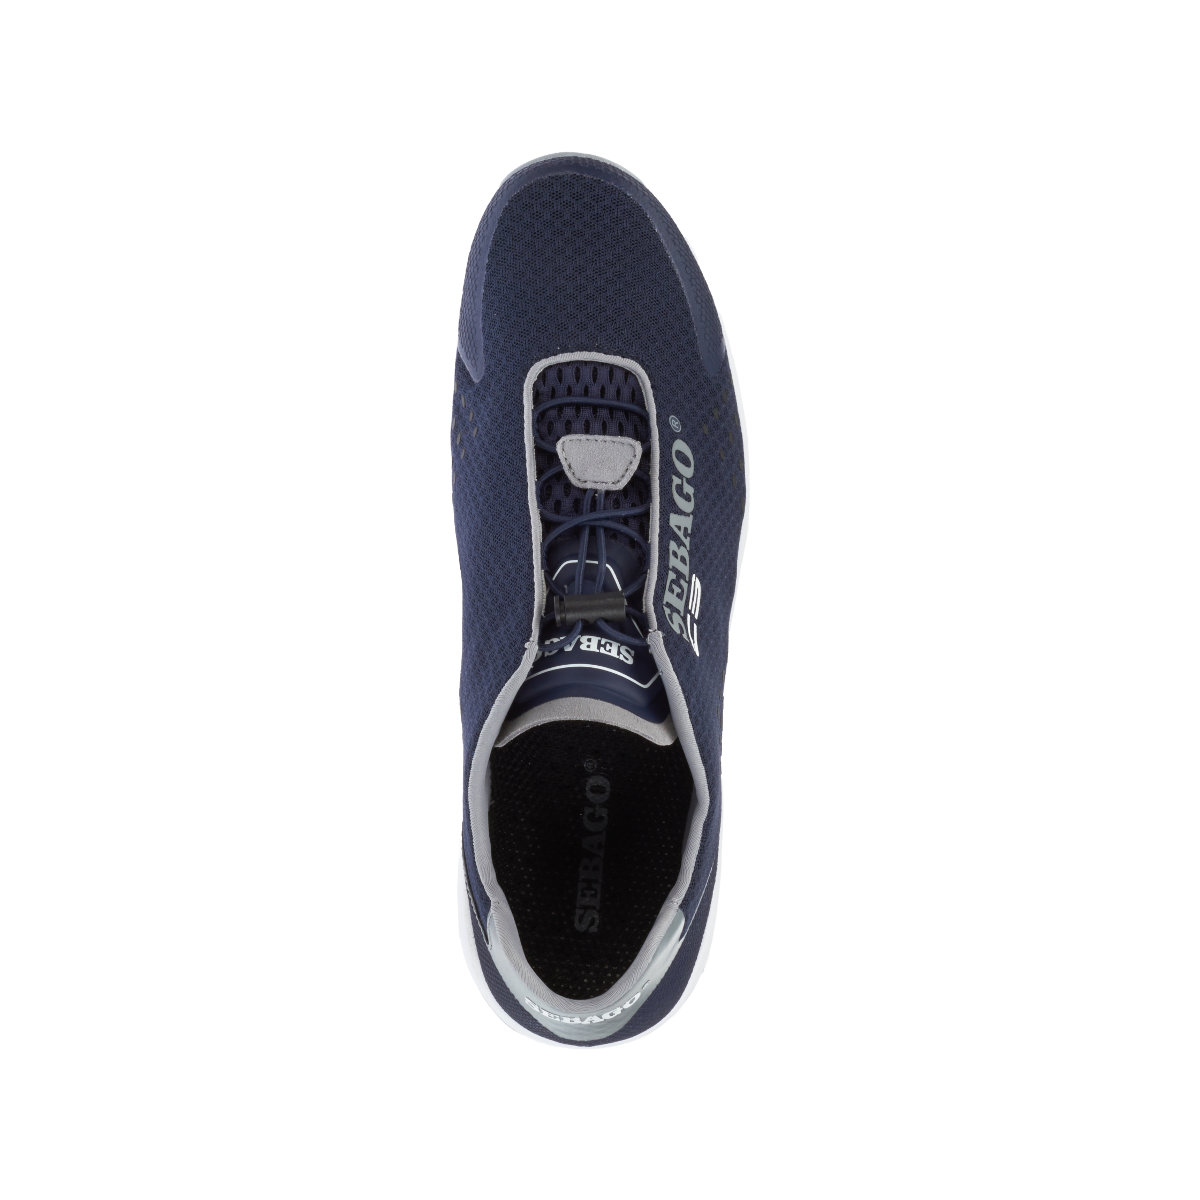 Sebago Cyphon Sea Sport chaussures à voile homme navy, taille EU 41,5 (US 8)